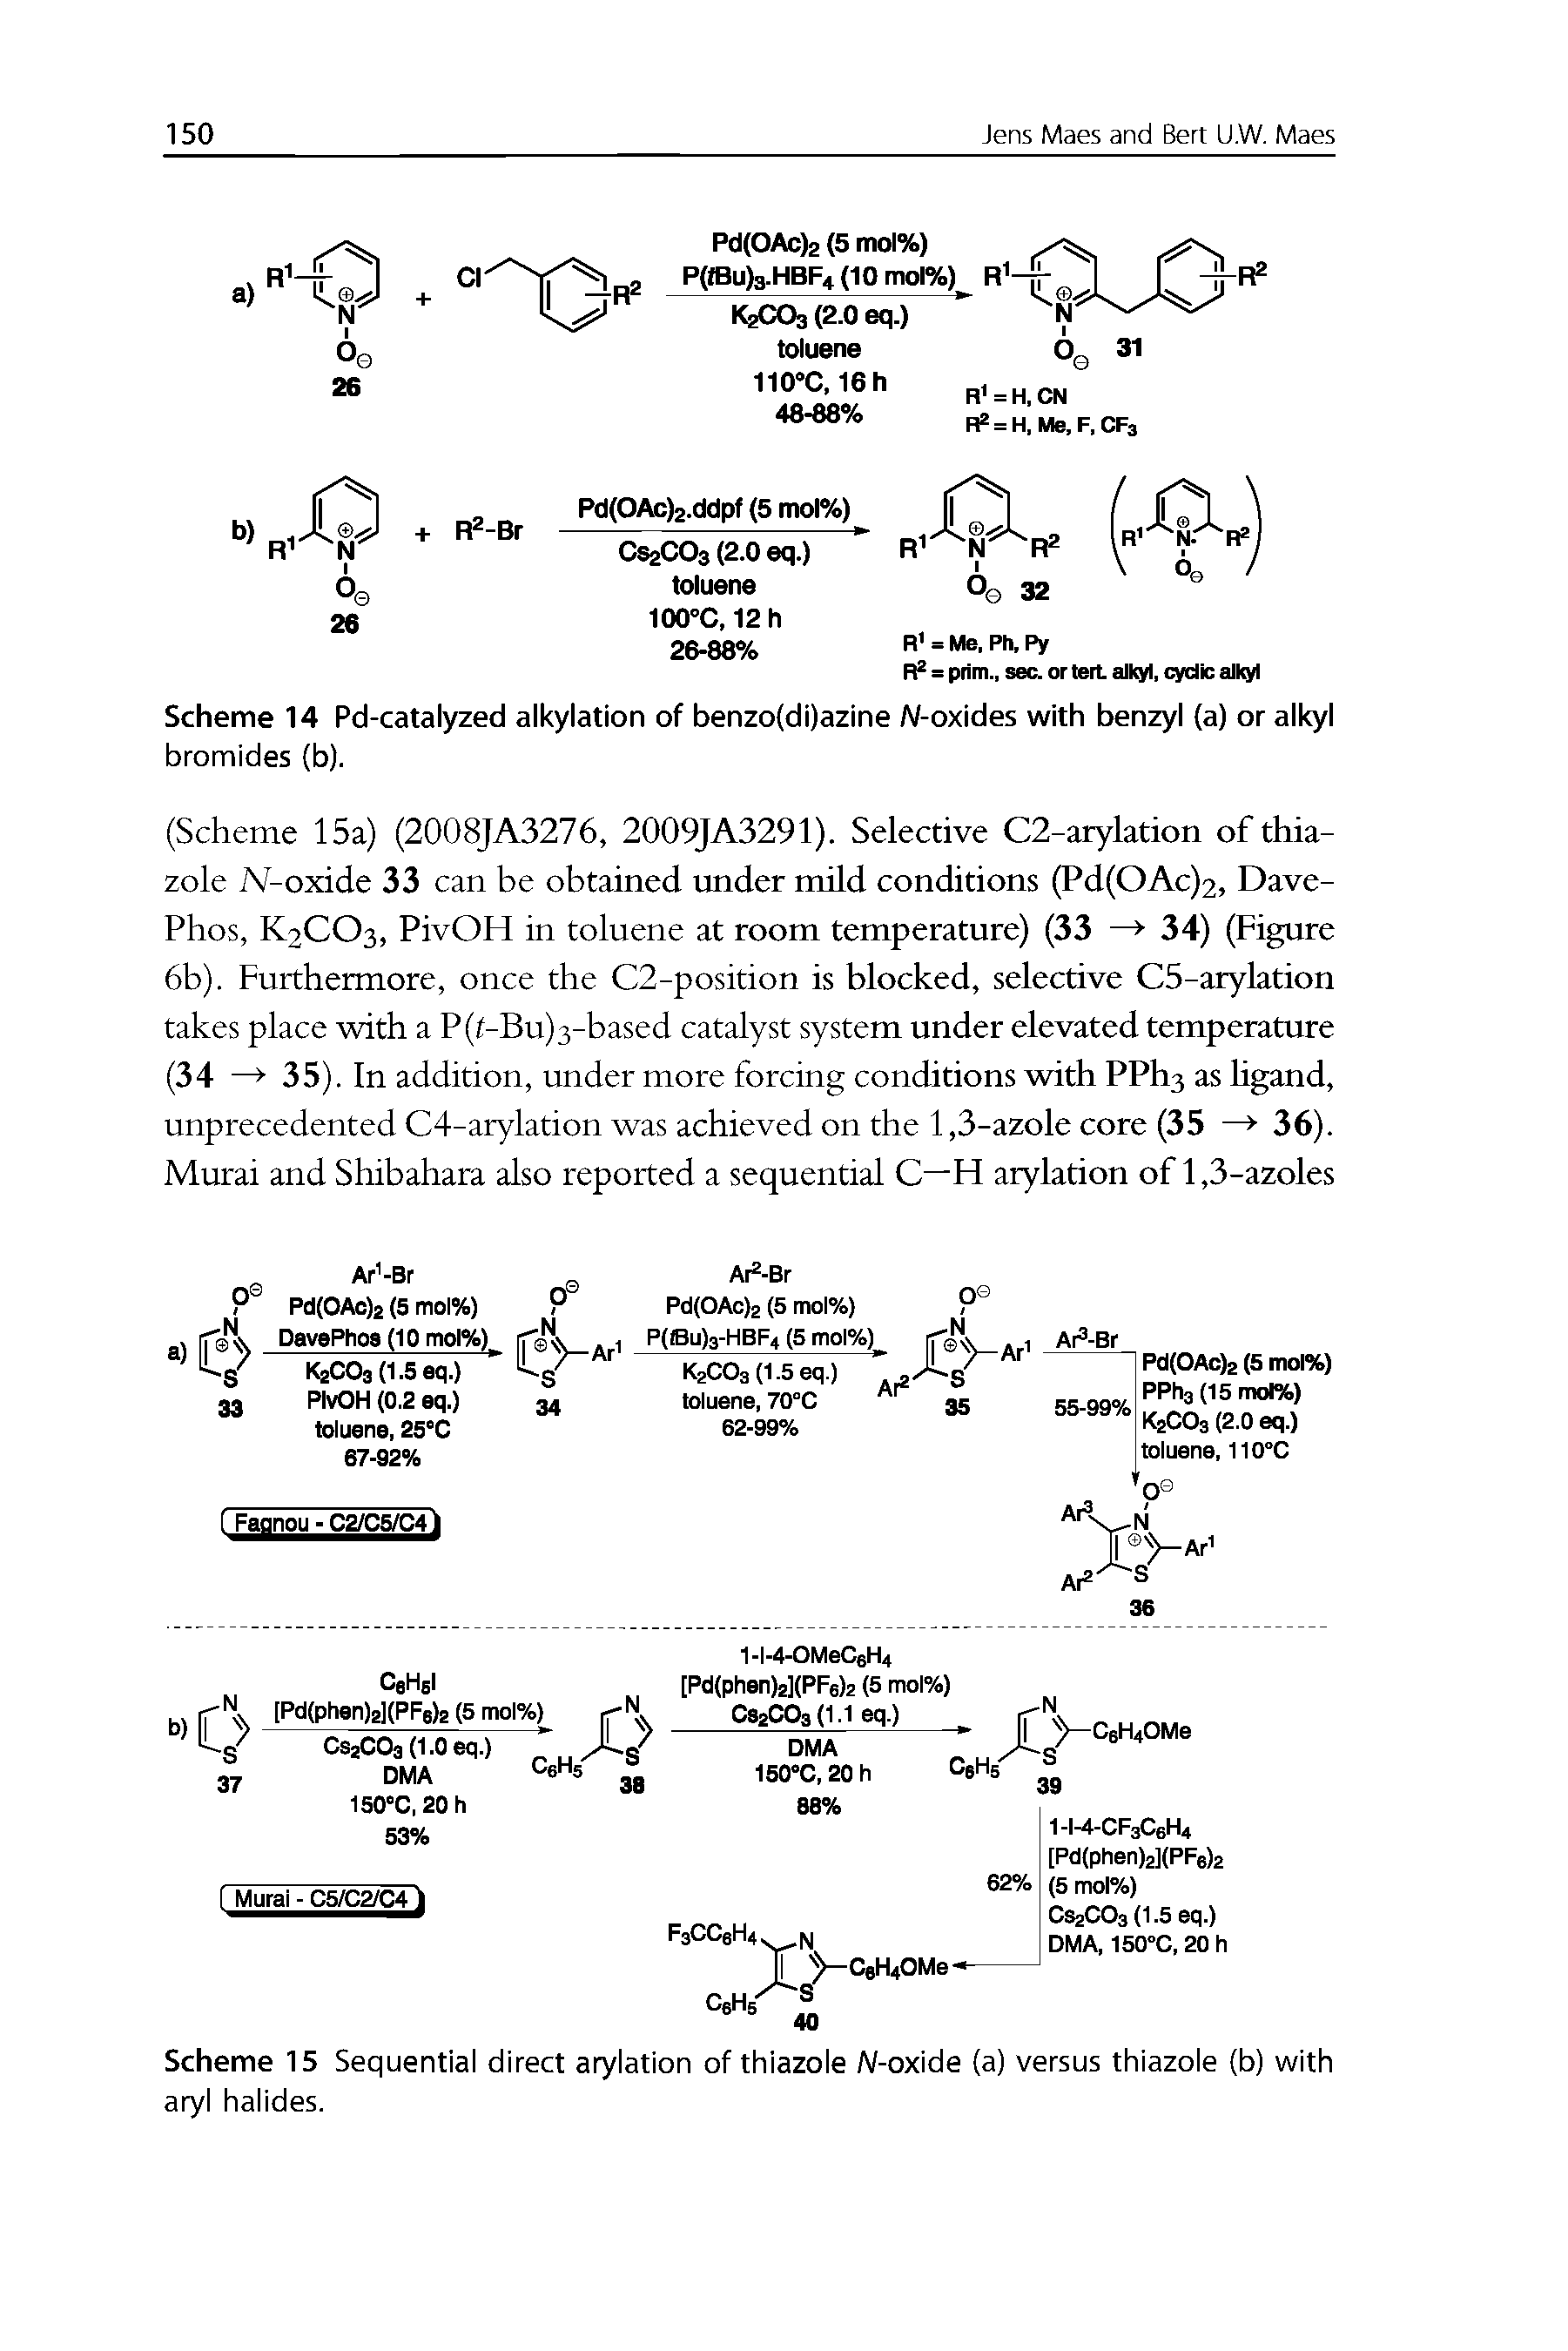 Scheme 15 Sequential direct arylation of thiazole A/-oxide (a) versus thiazole (b) with aryl halides.